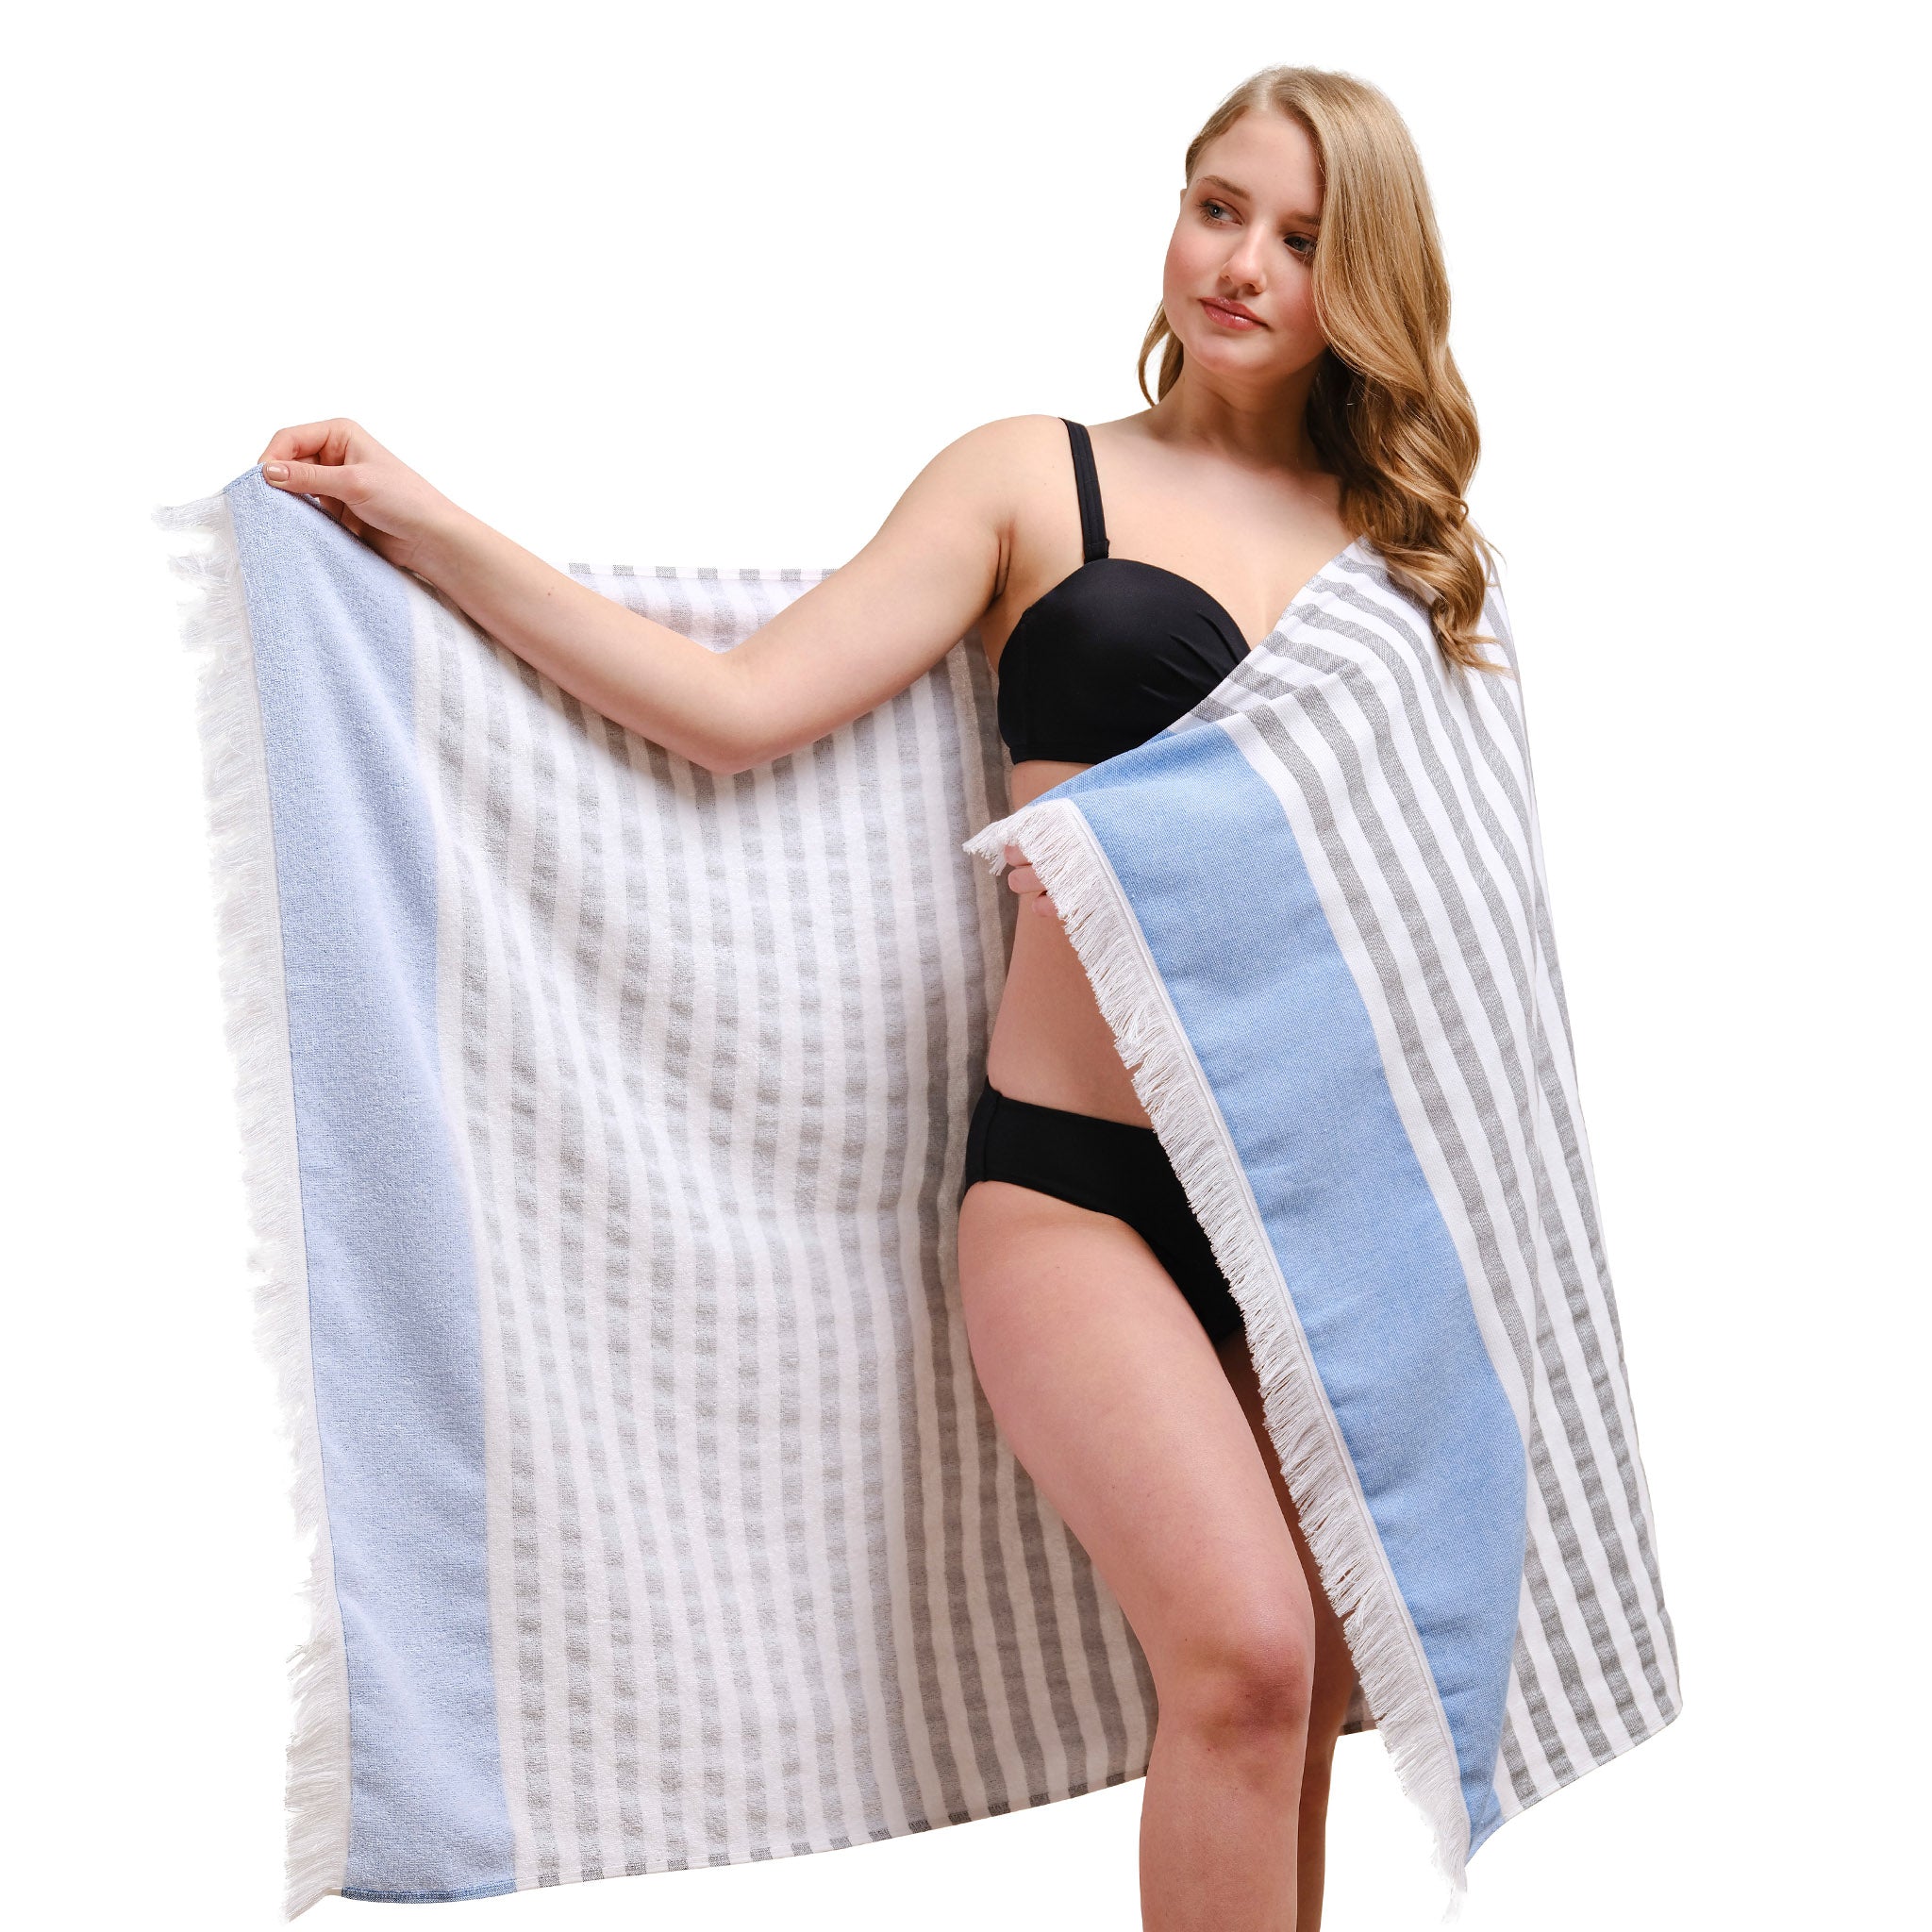 American Soft Linen Peshtemal Beach Towels, Turkish Terry 35x60 Inches - Rose